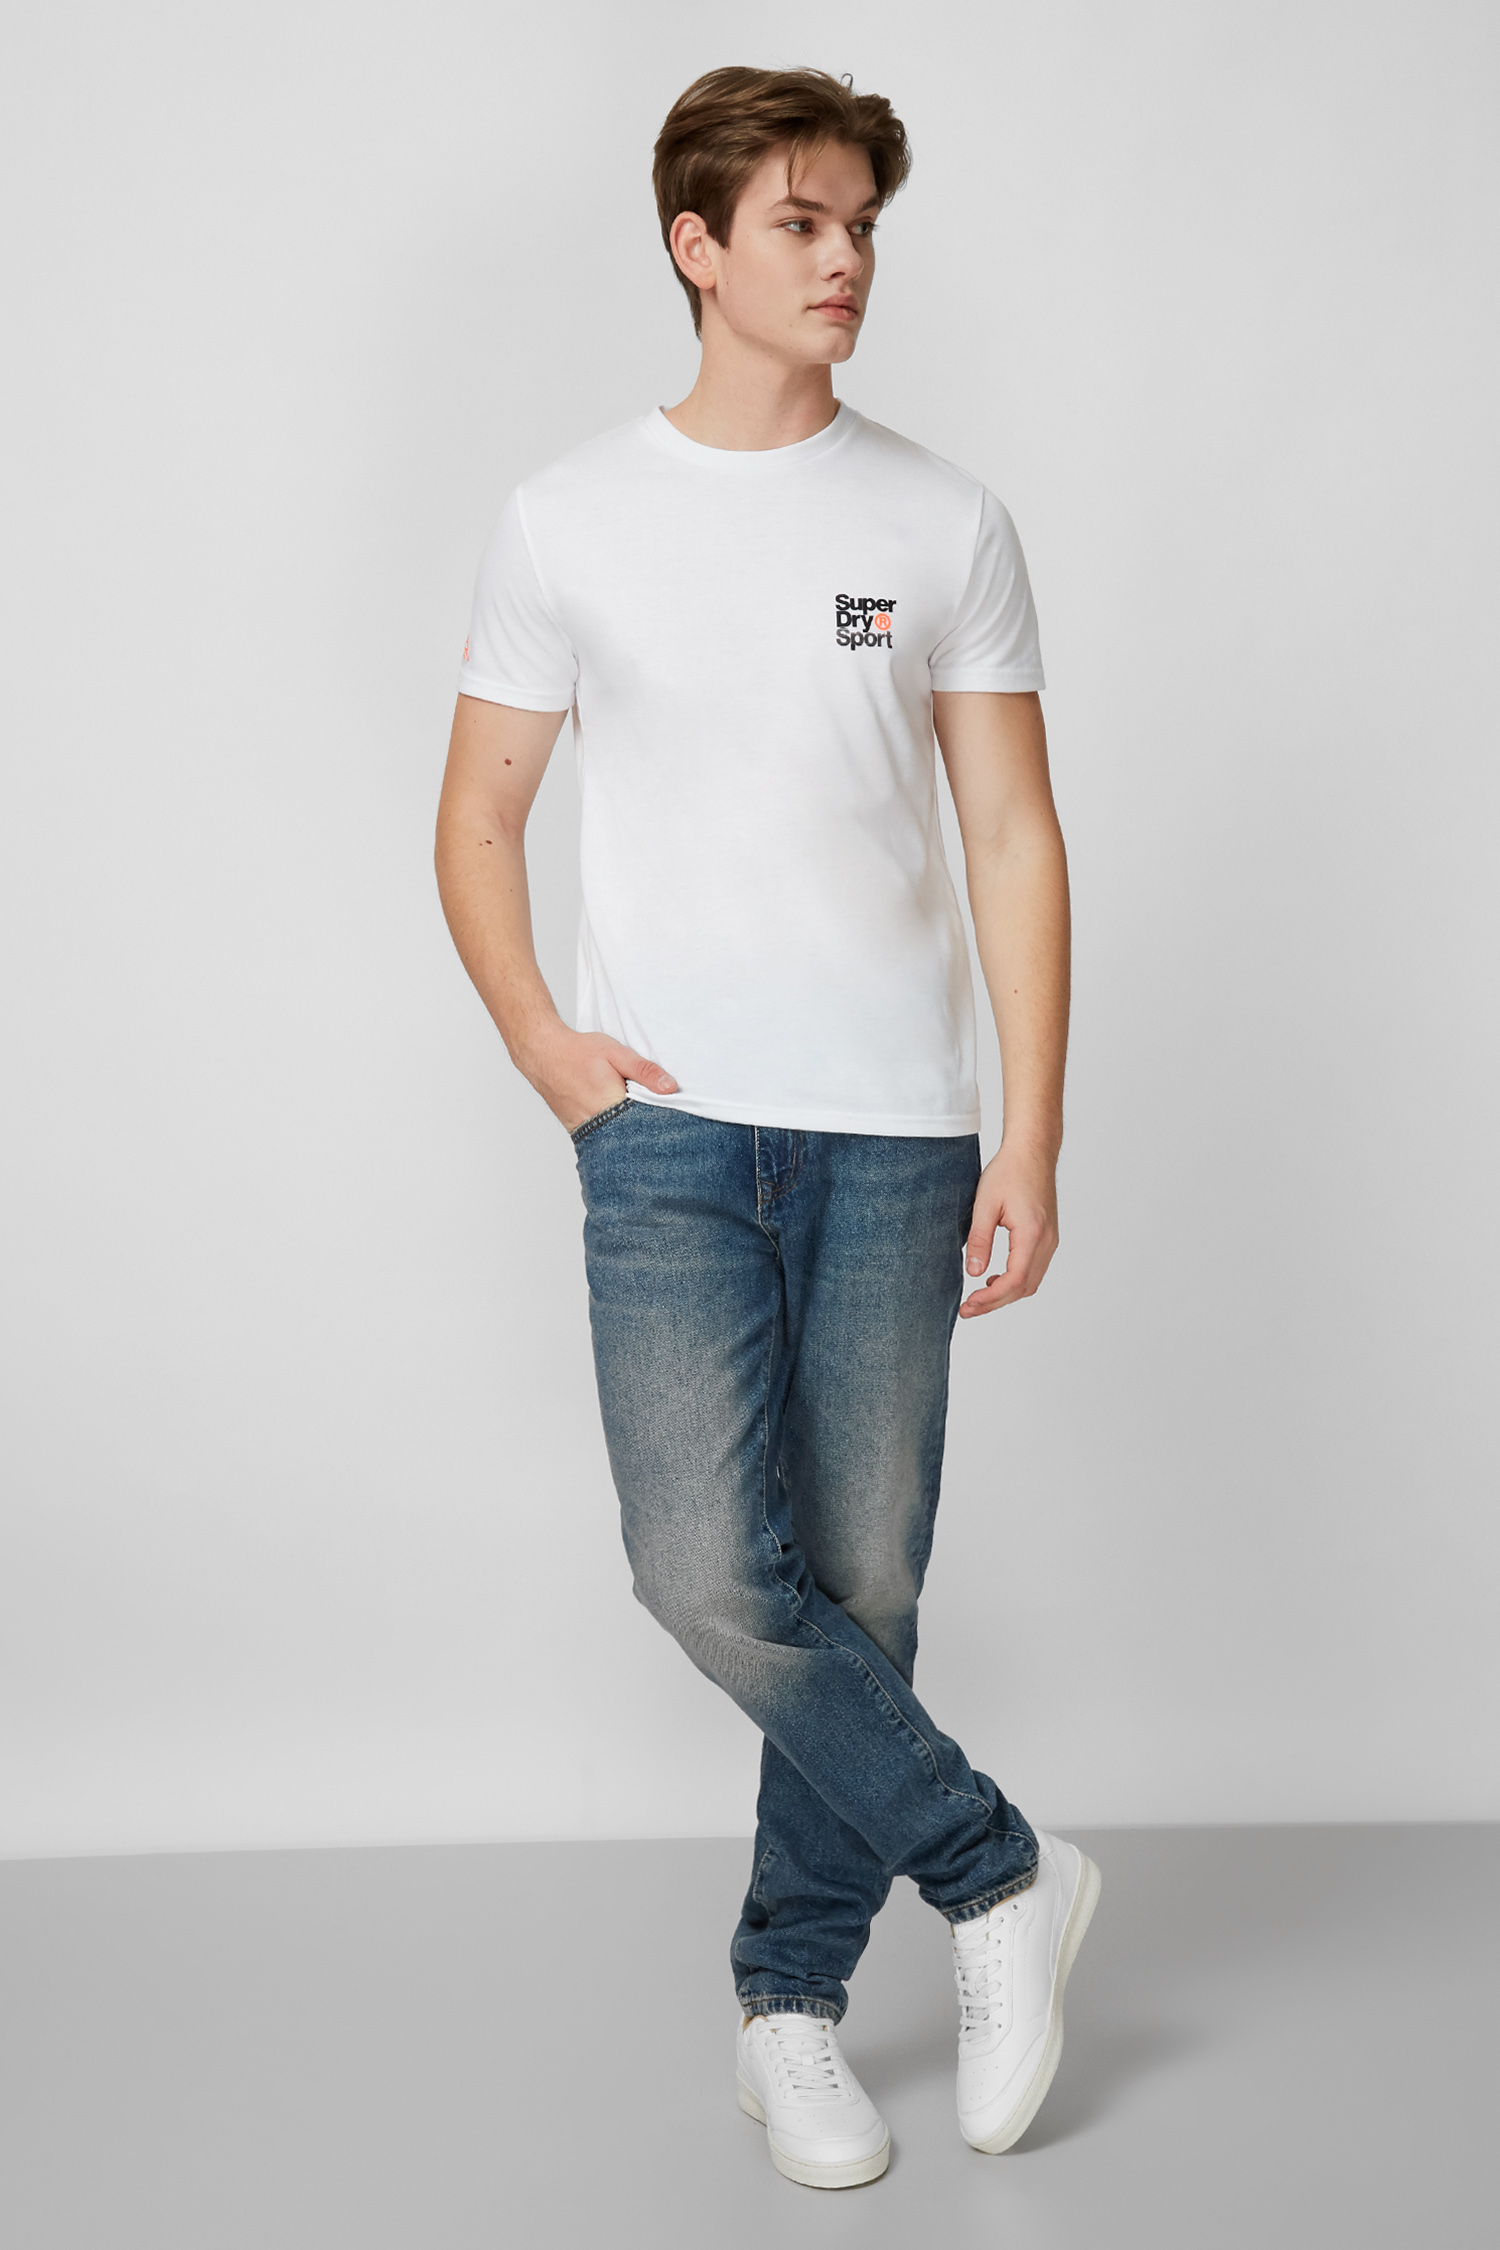 Белая футболка для парней SuperDry MS300015A;01C